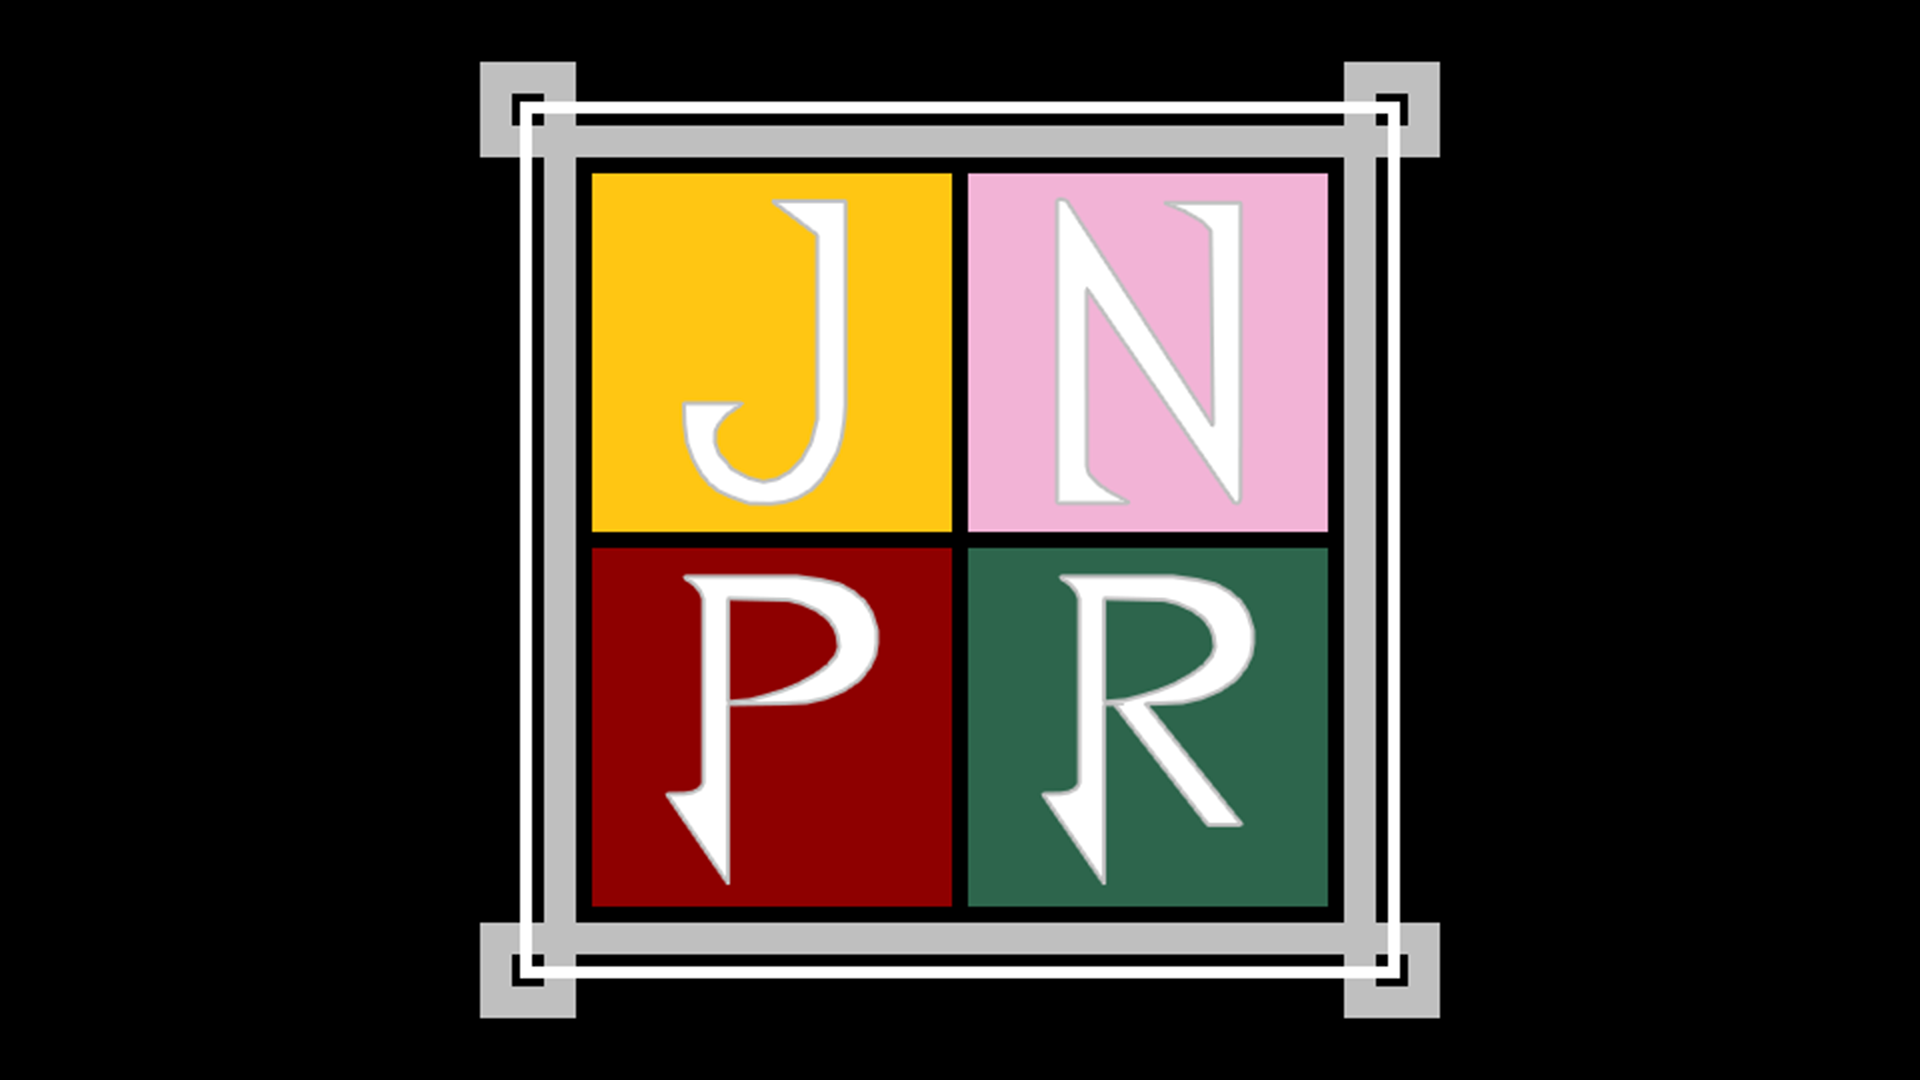 Icon for Go Team JNPR!